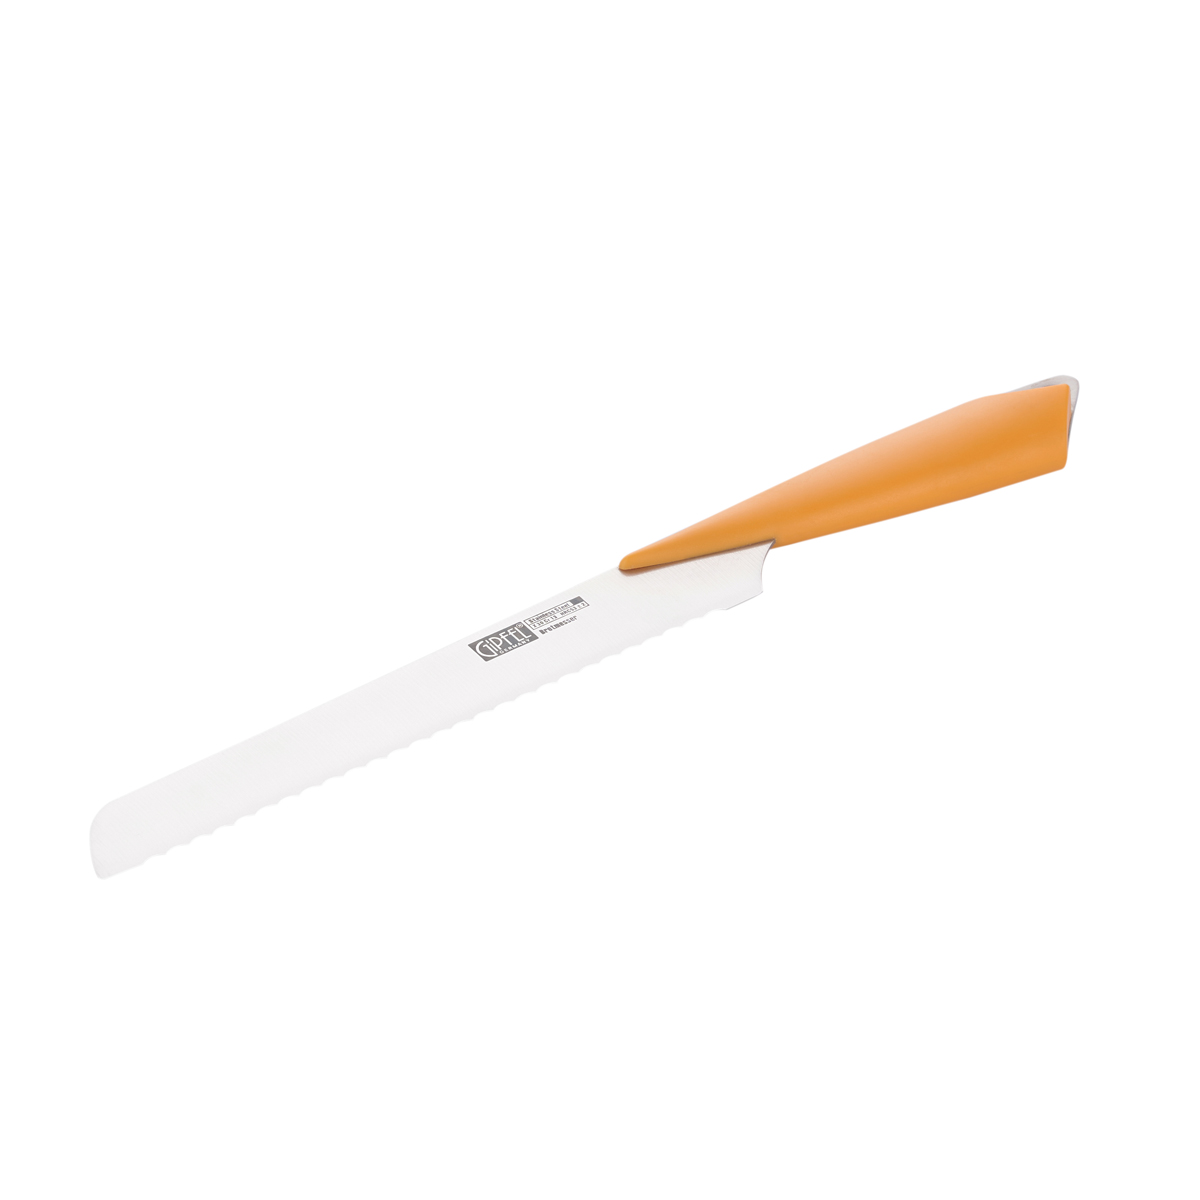 Хлебный нож Gipfel Allos 6866, цвет желтый - фото 1